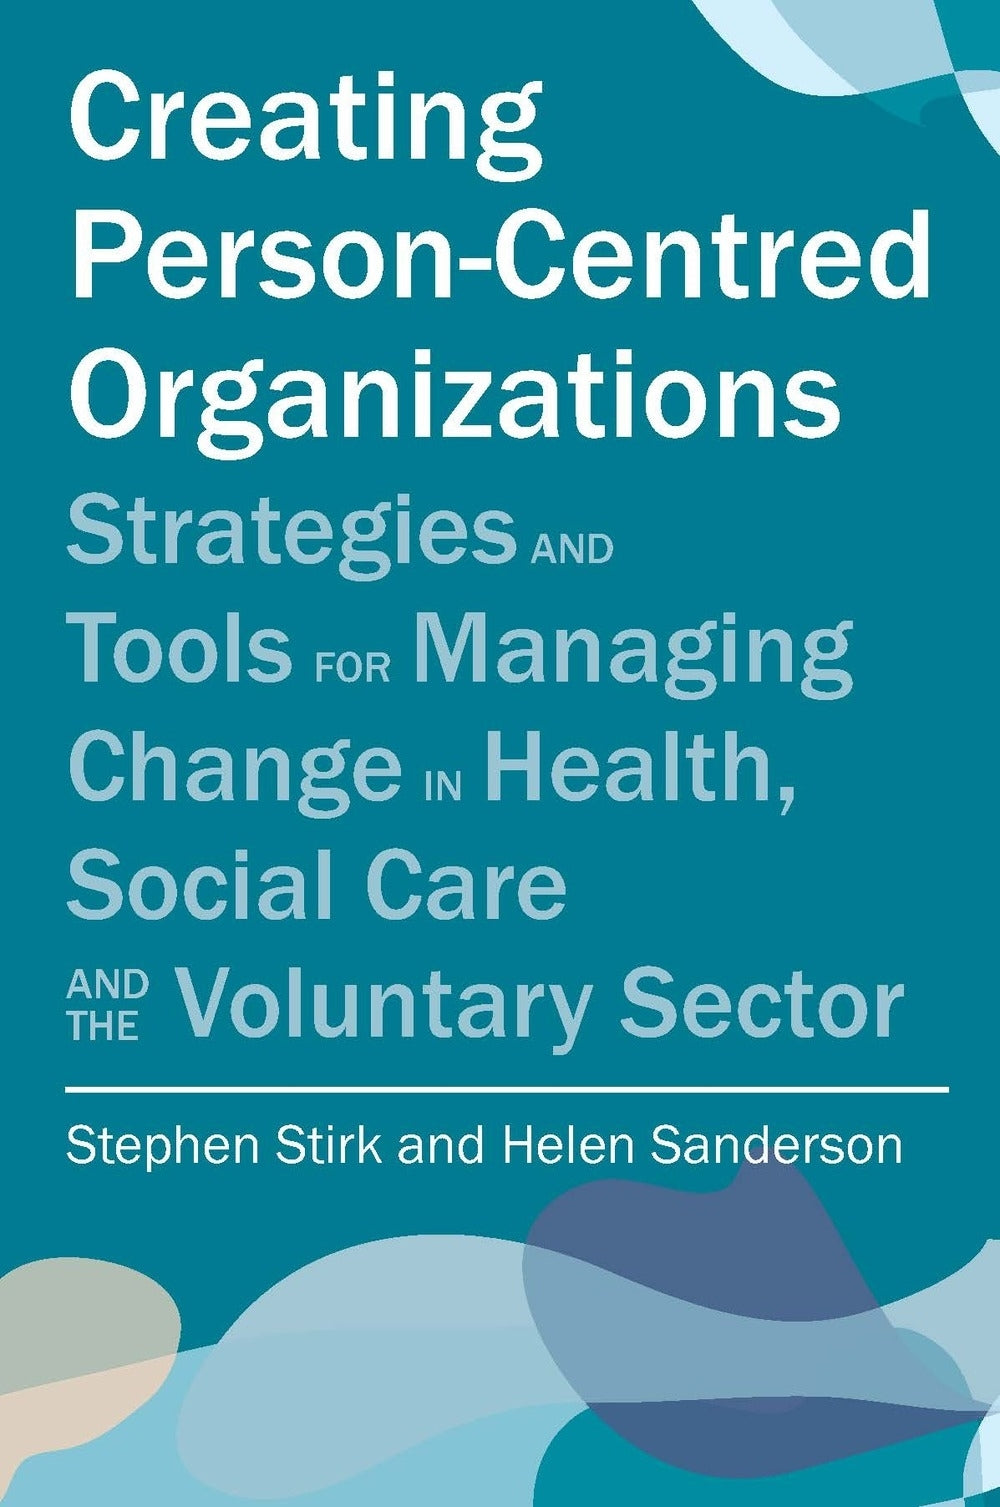 Creating Person-Centred Organisations by Stephen Stirk, Helen Sanderson